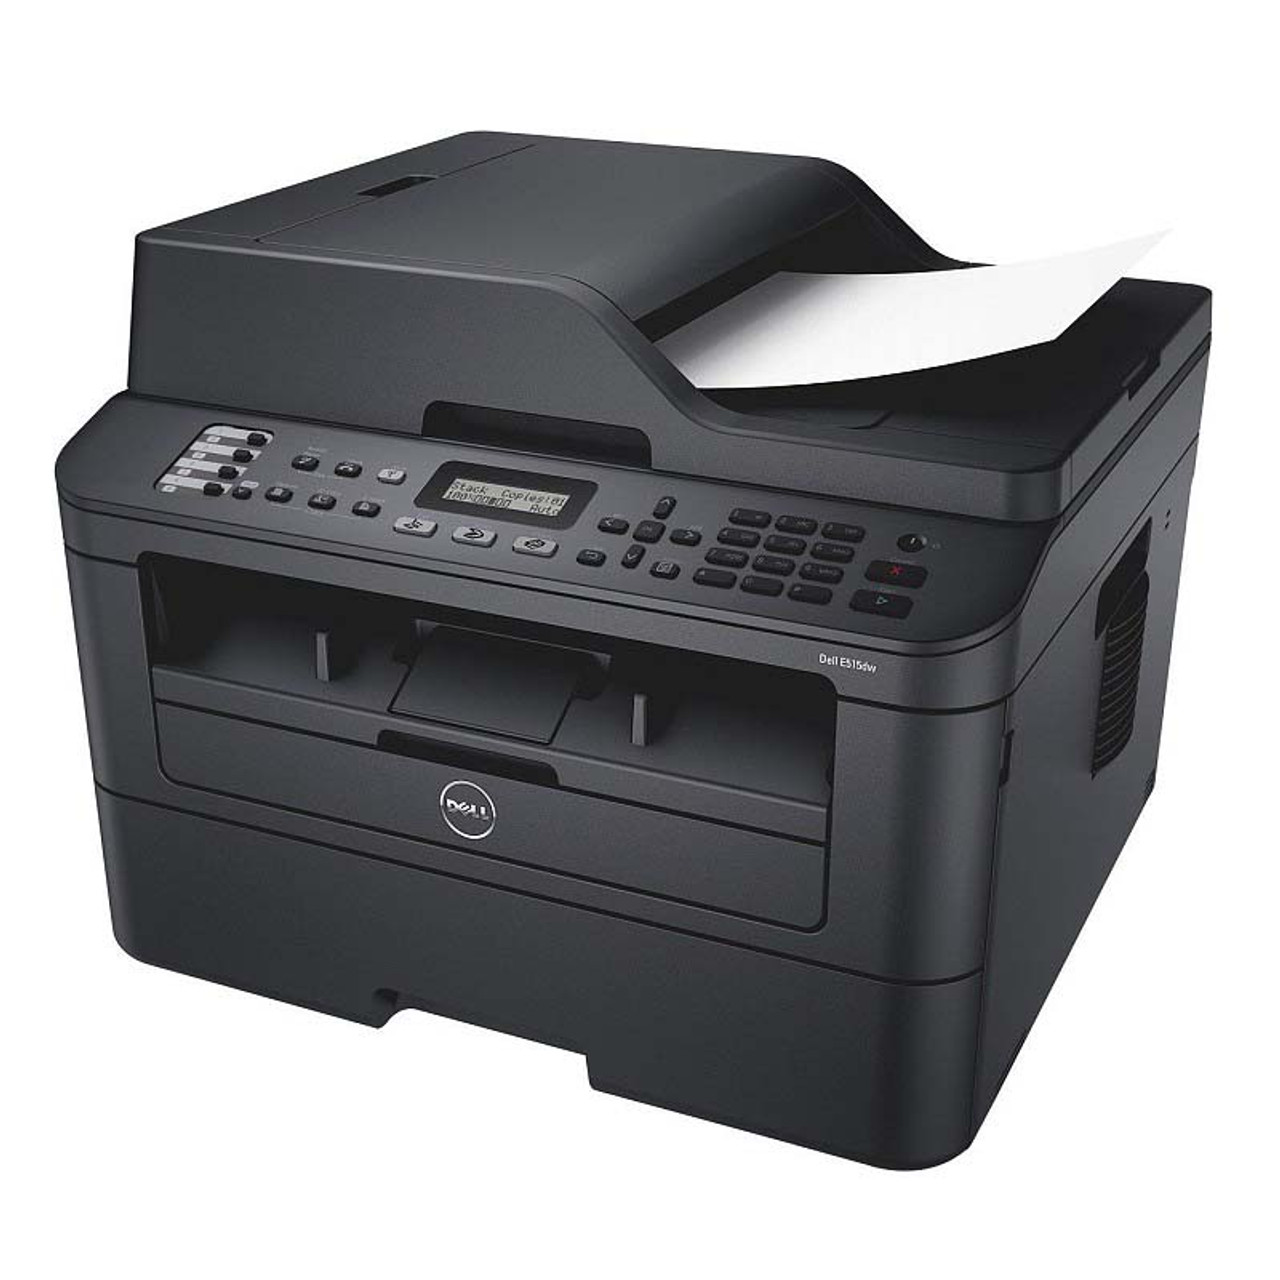 PKGT4 - Dell E515dw All-in-one Laser WiFi Mono Printer/Copier/Scanner/Fax with Duplex